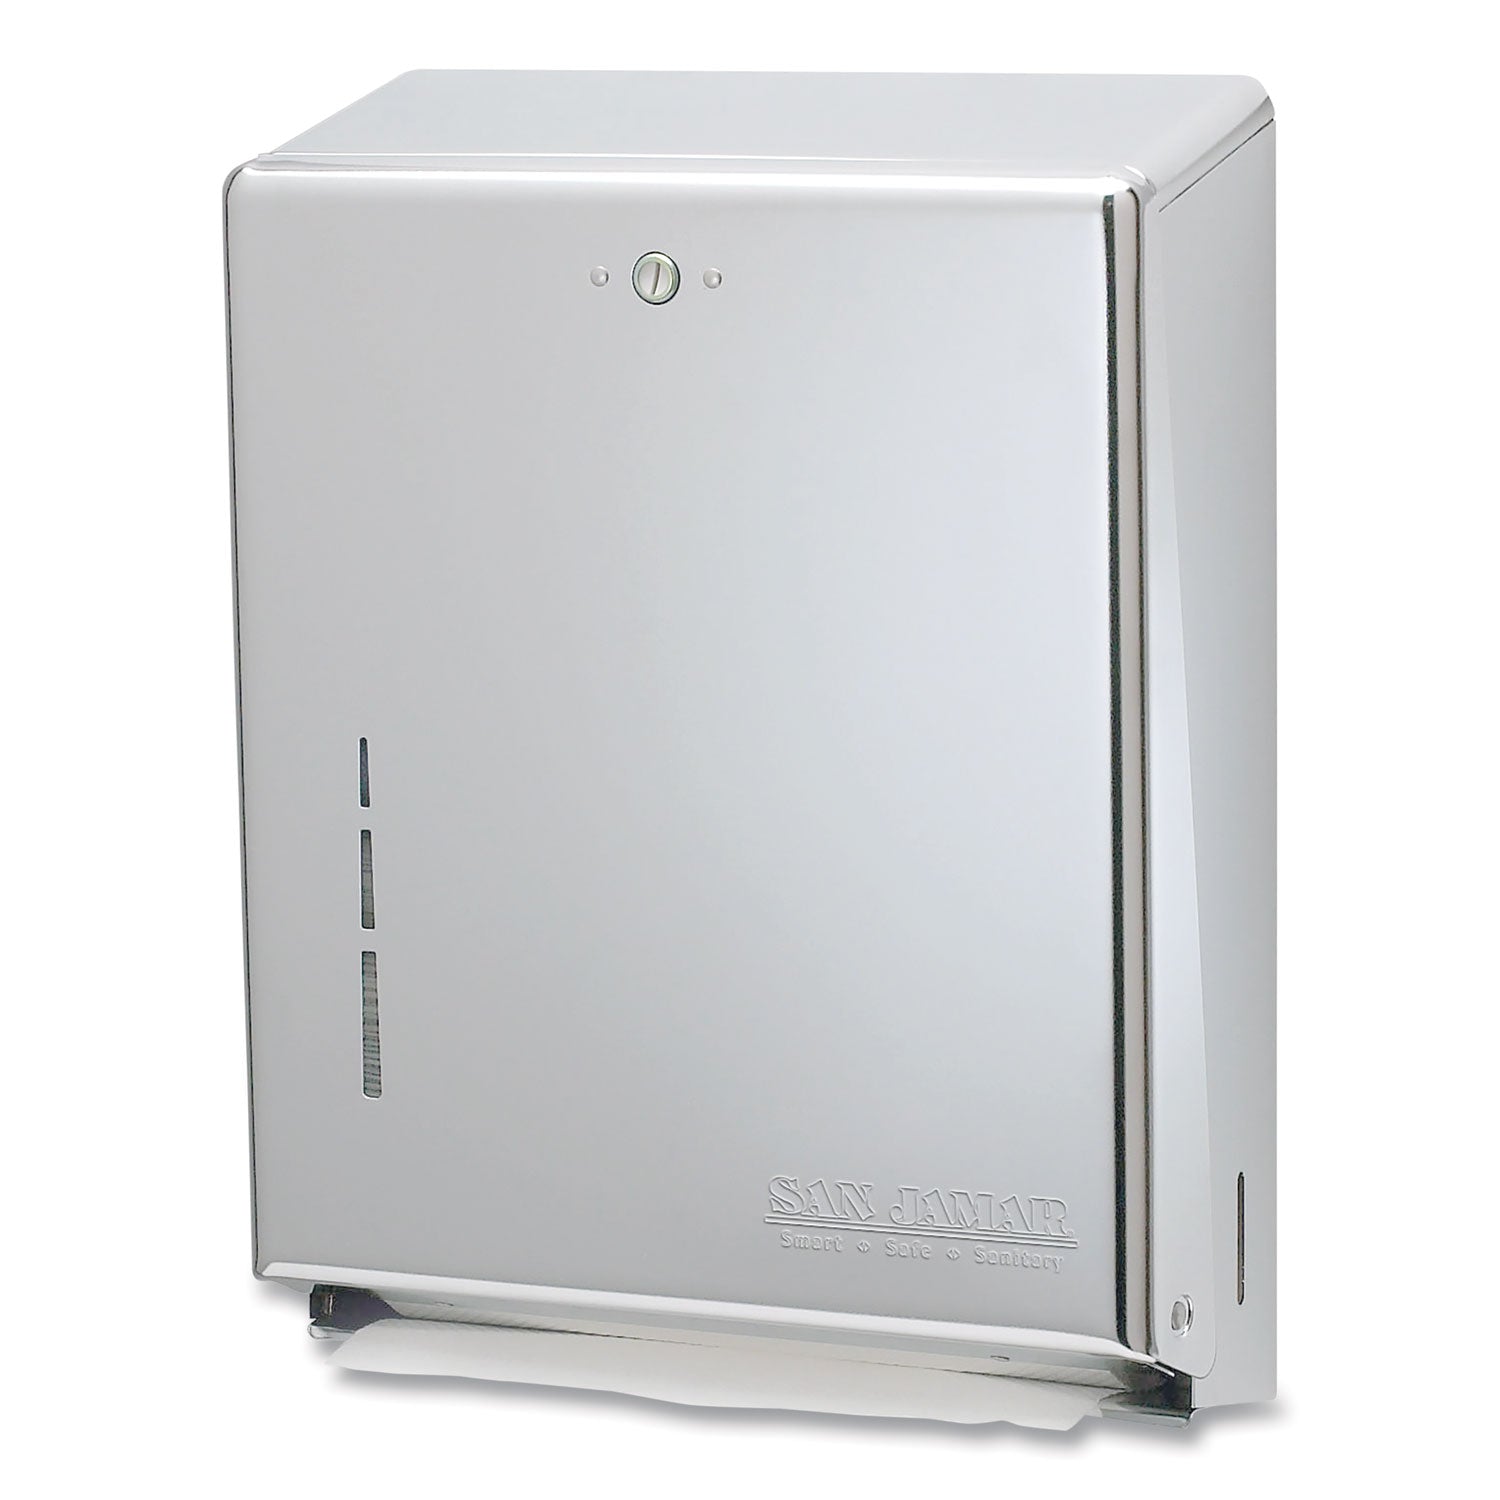 C-Fold/Multifold Towel Dispenser, 11.38 x 4 x 14.75, Stainless Steel - 